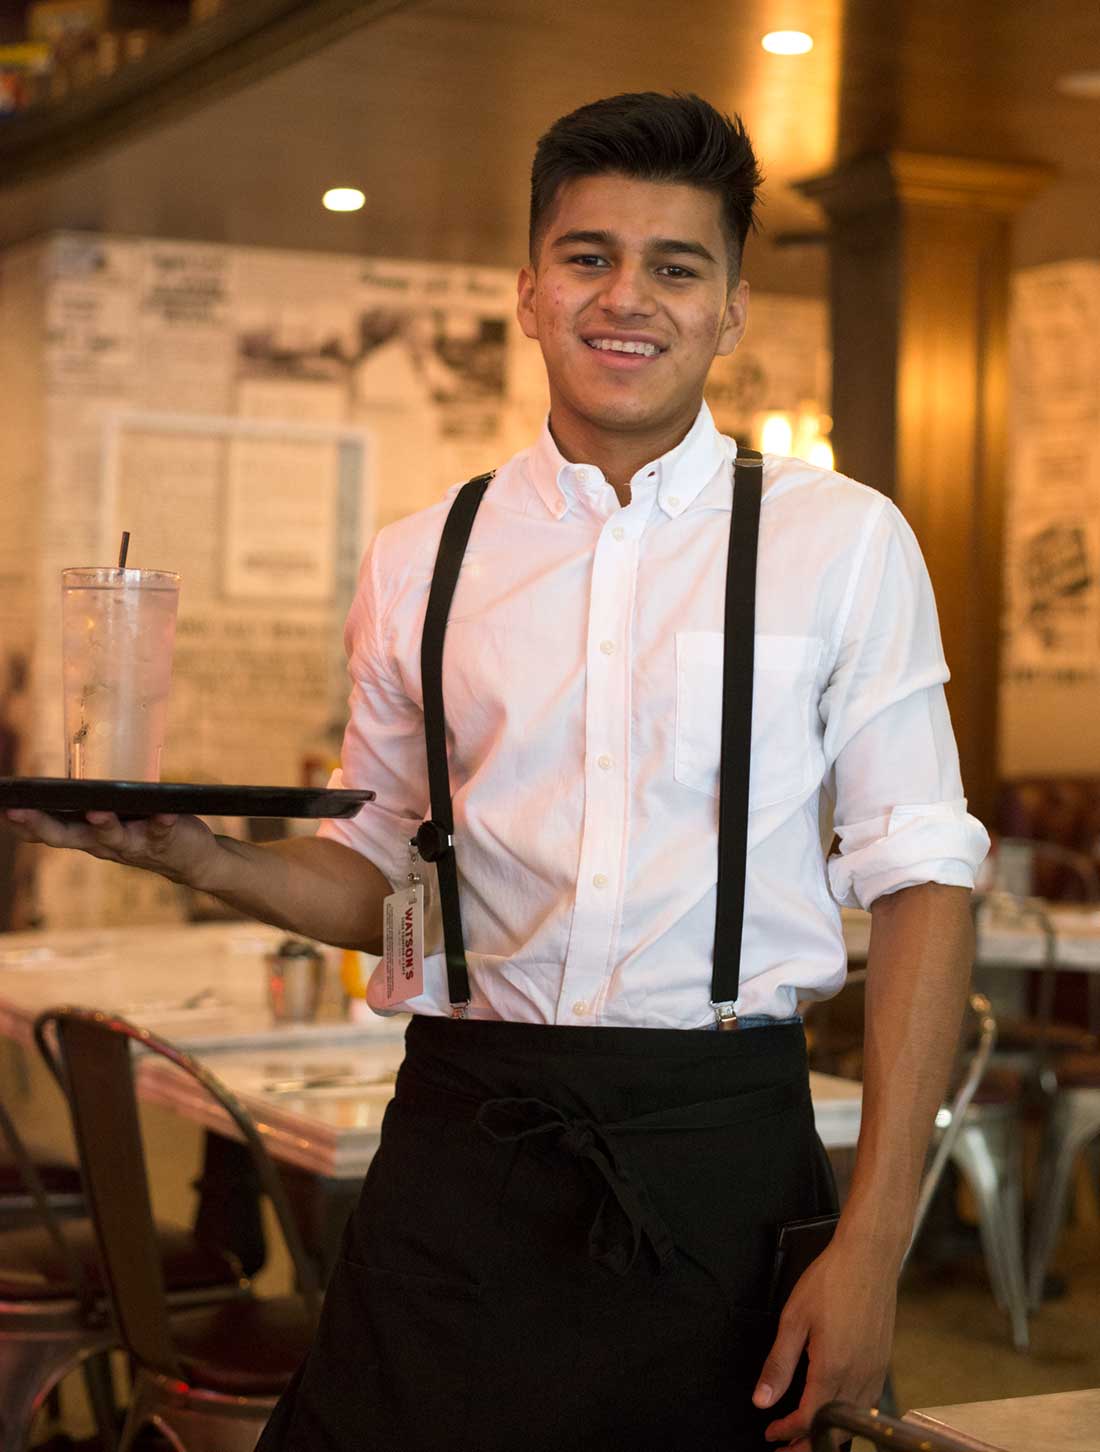 Watson's waiter